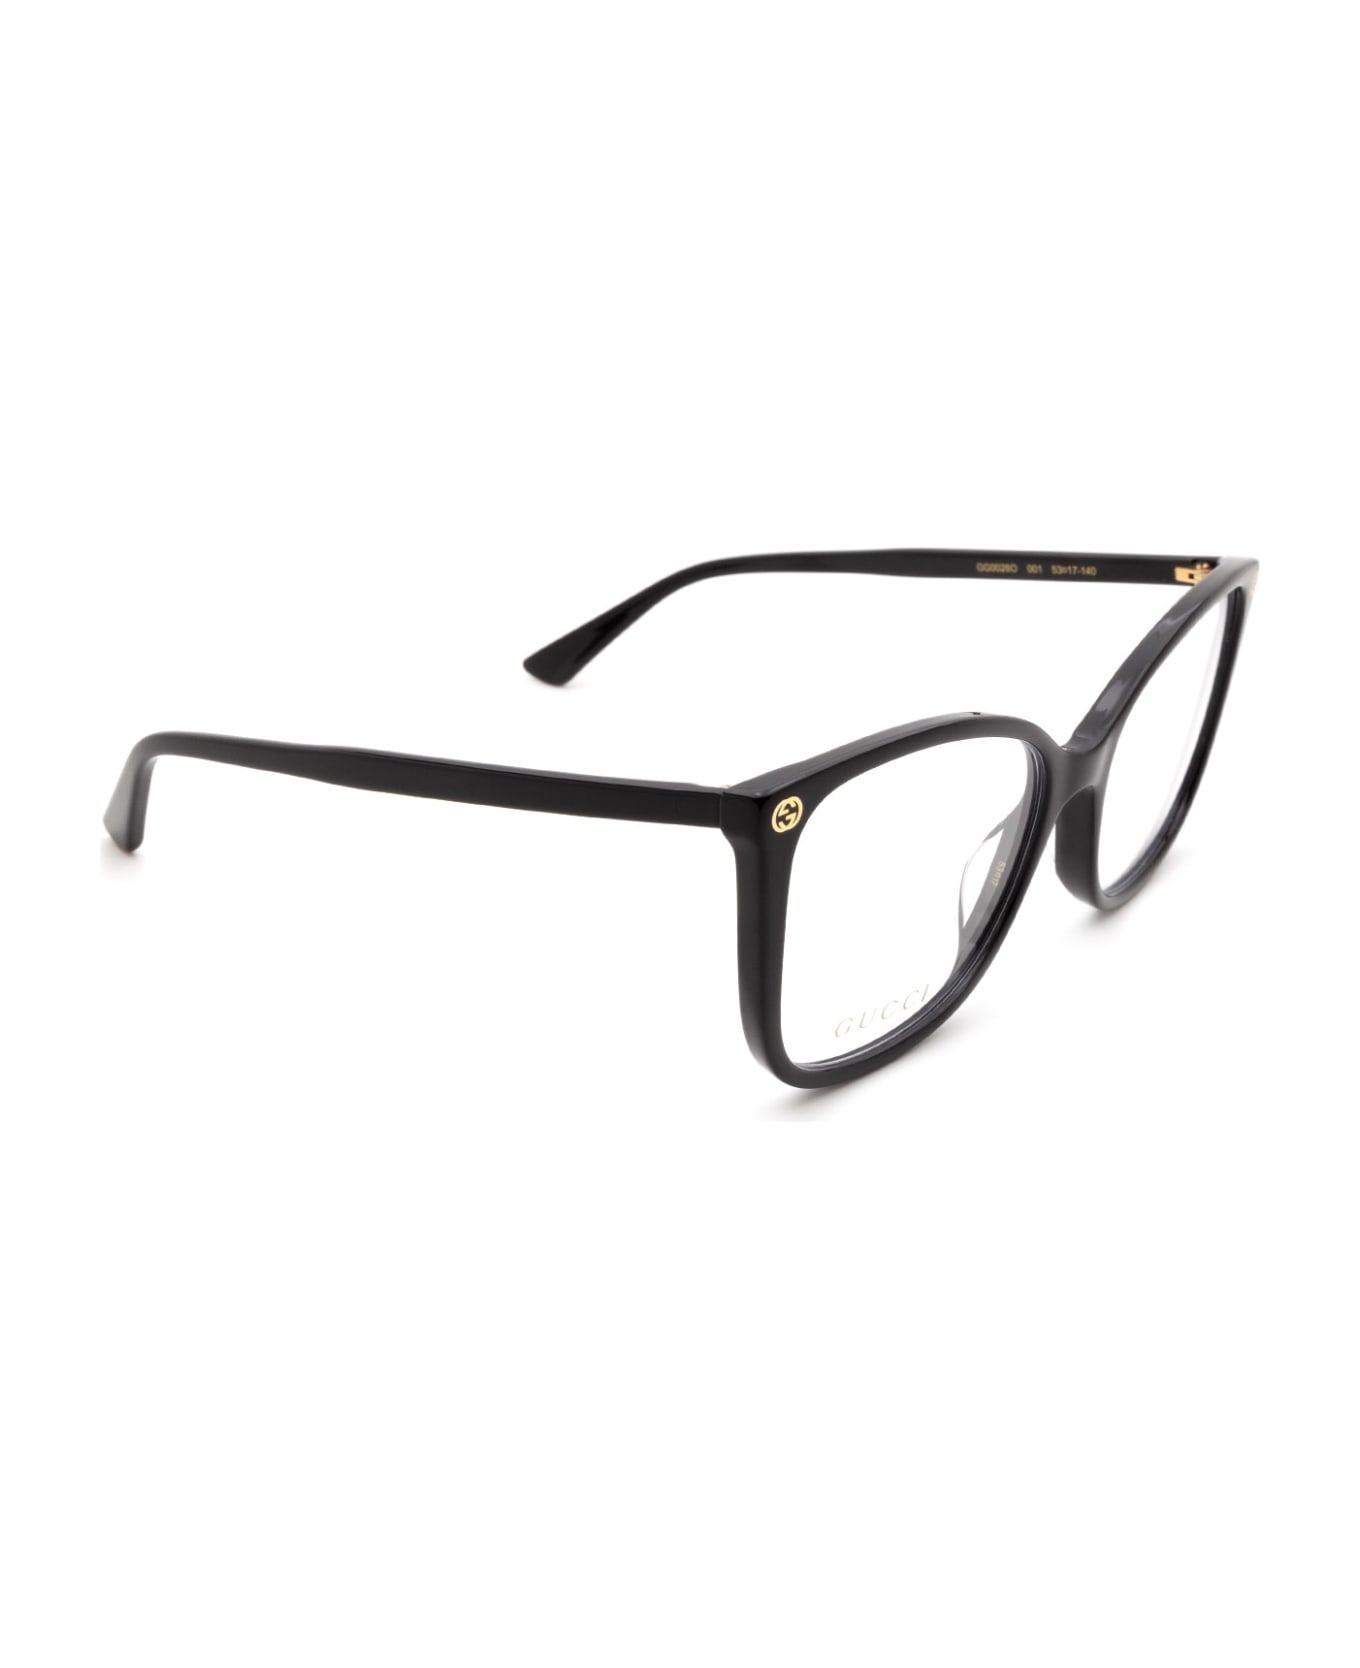 Gucci Eyewear Gg0026o Black Glasses - Black アイウェア